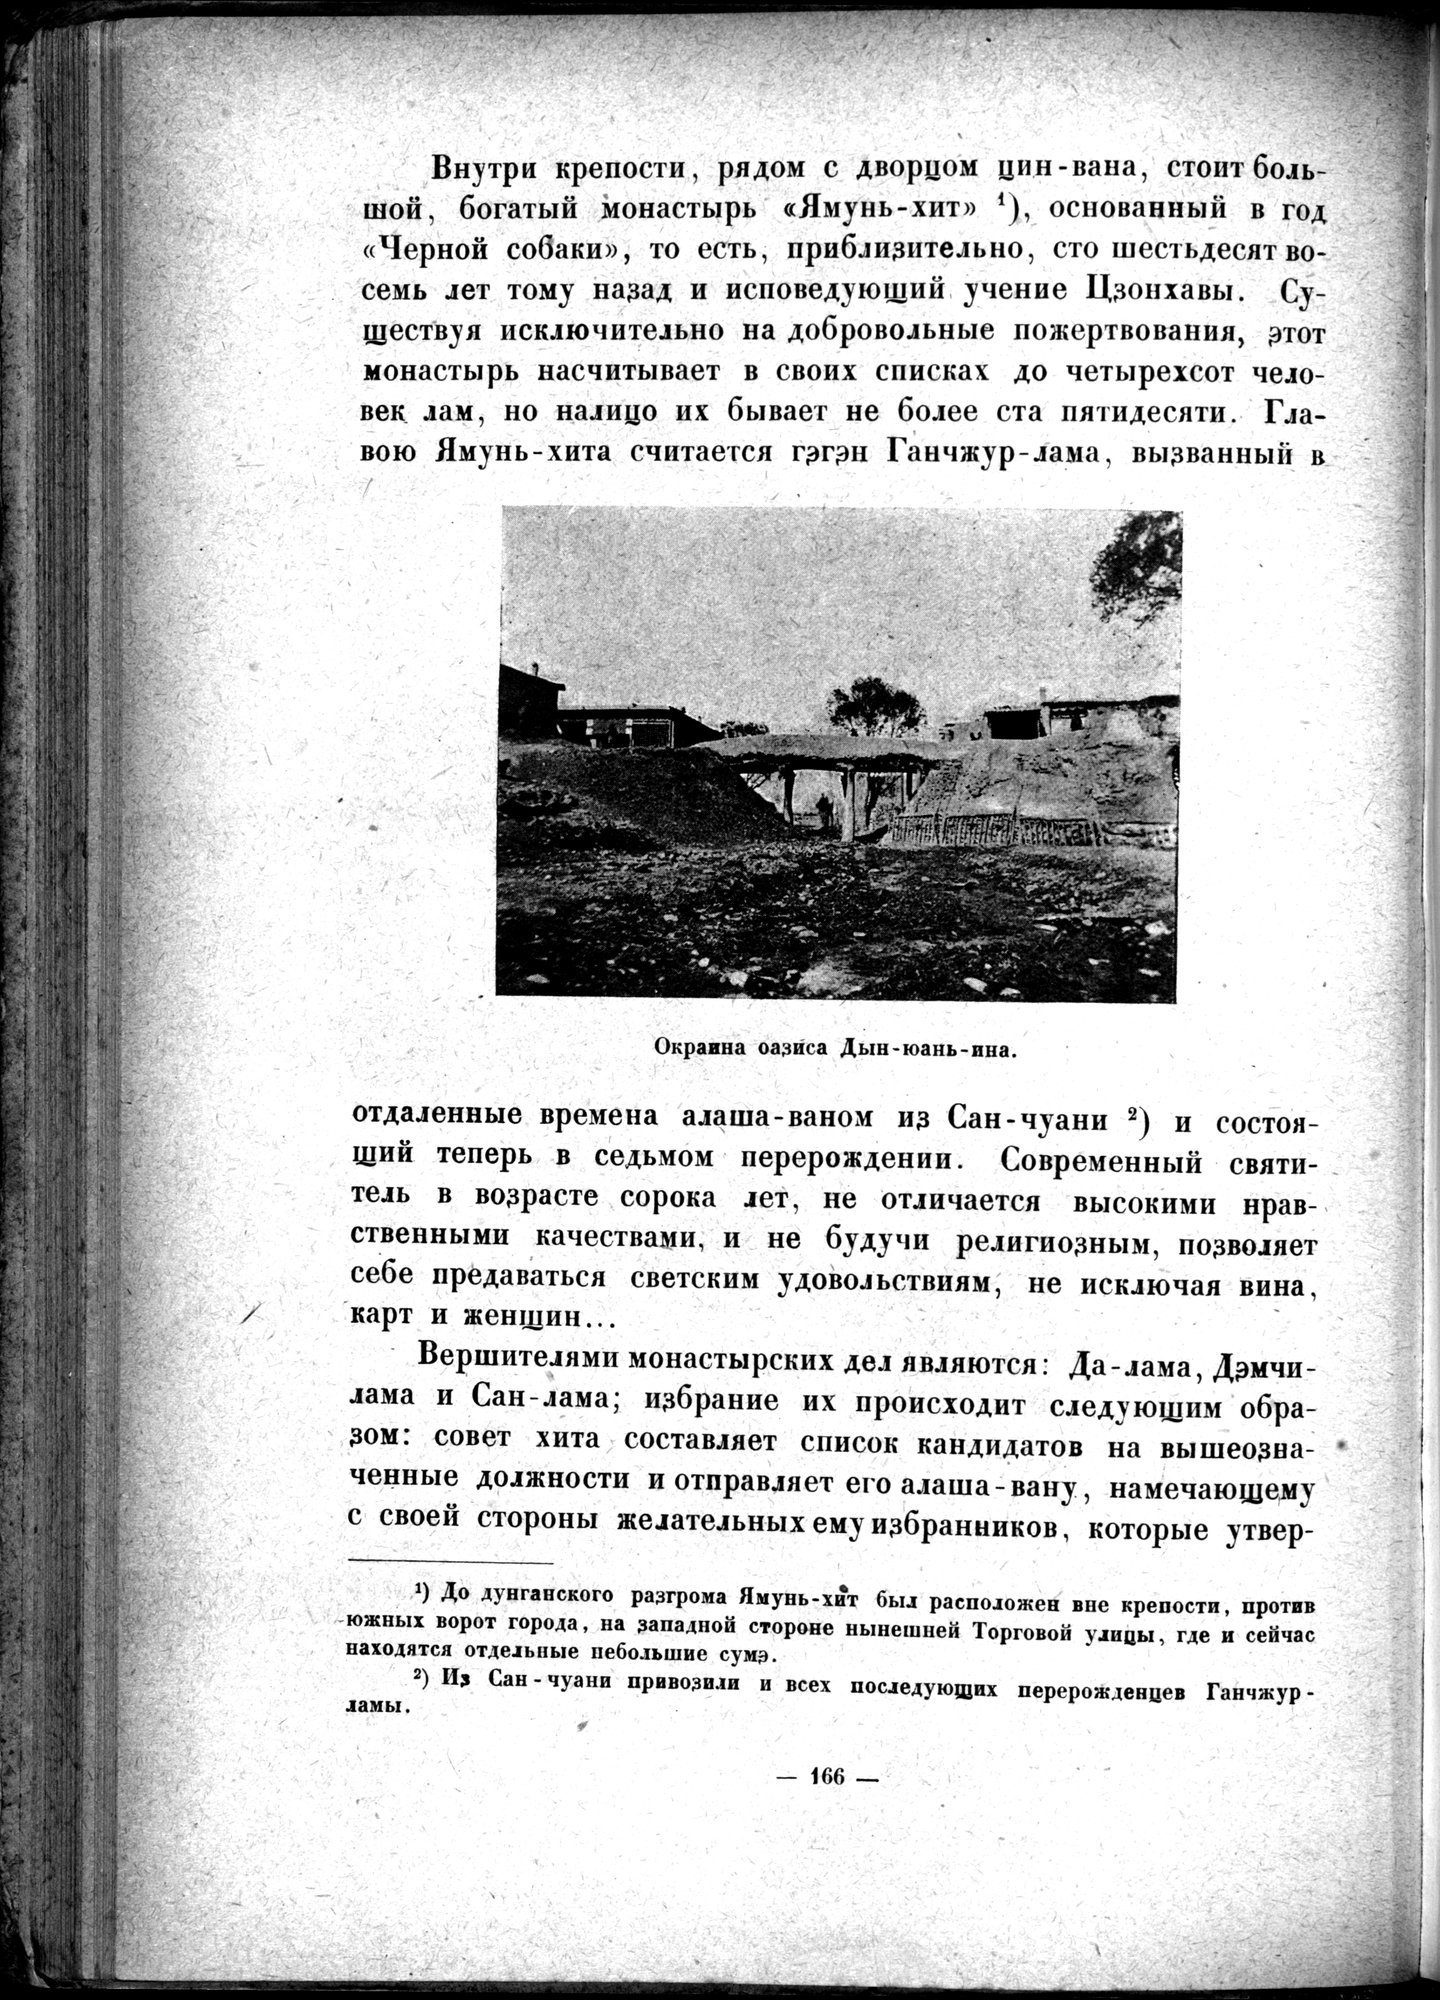 Mongoliya i Amdo i mertby gorod Khara-Khoto : vol.1 / Page 194 (Grayscale High Resolution Image)